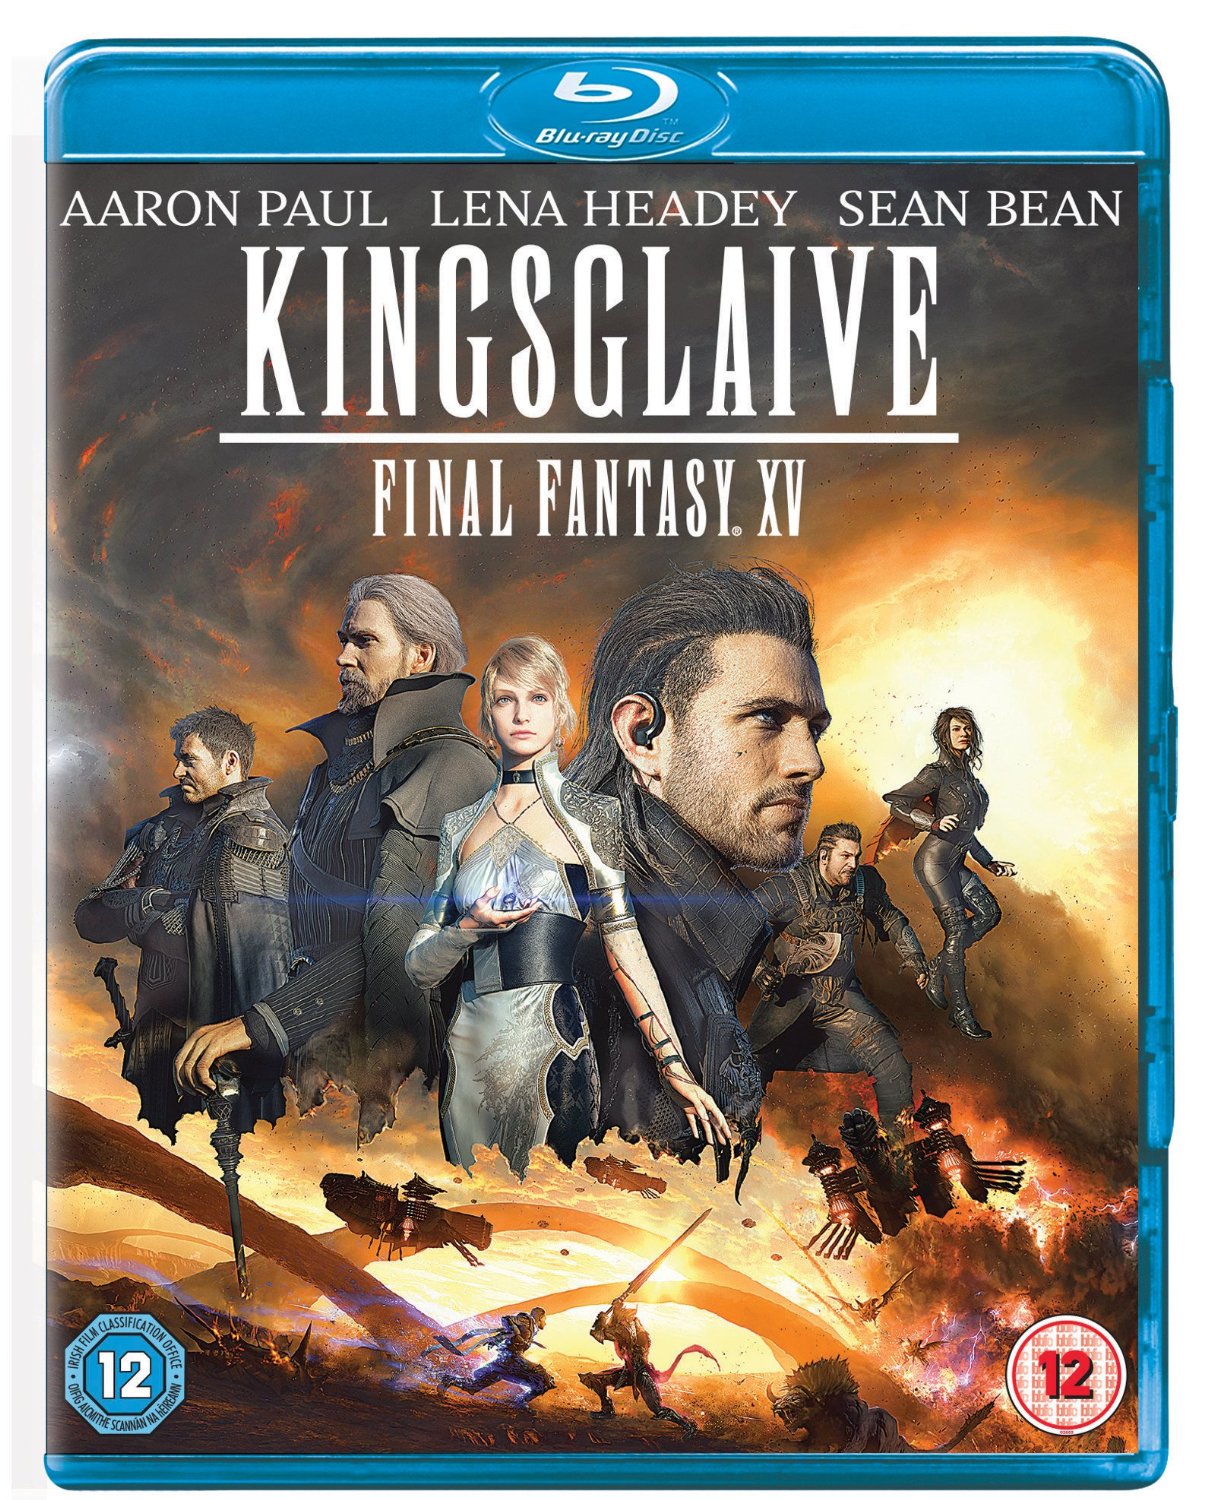 Kingsglaive Final Fantasy XV film review